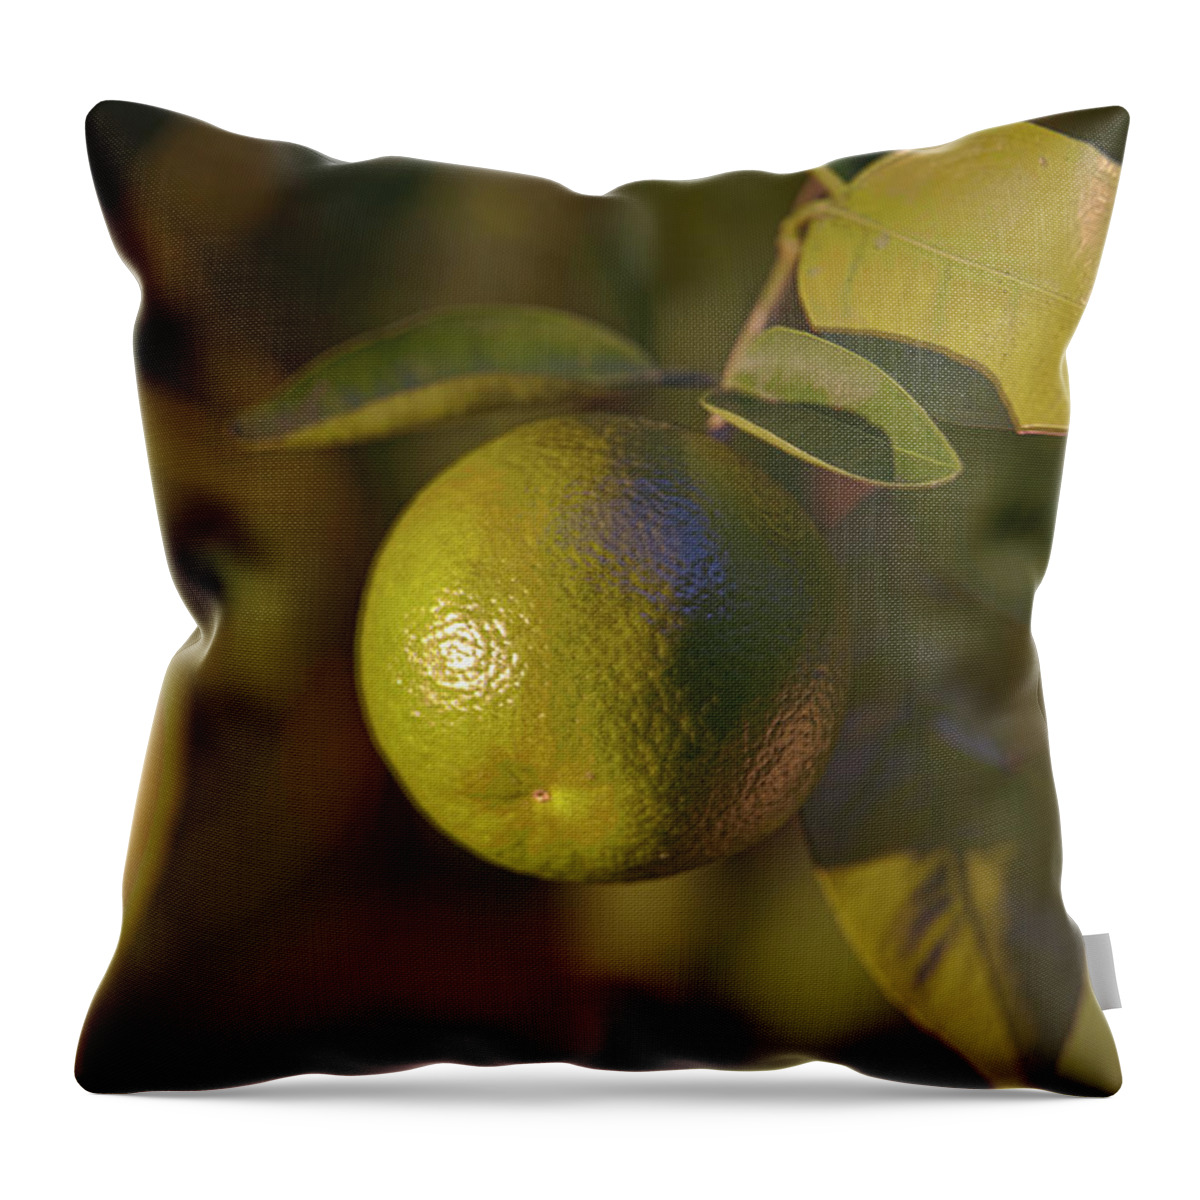 Tangerine Throw Pillow featuring the photograph Tangerine by Matthew Bamberg